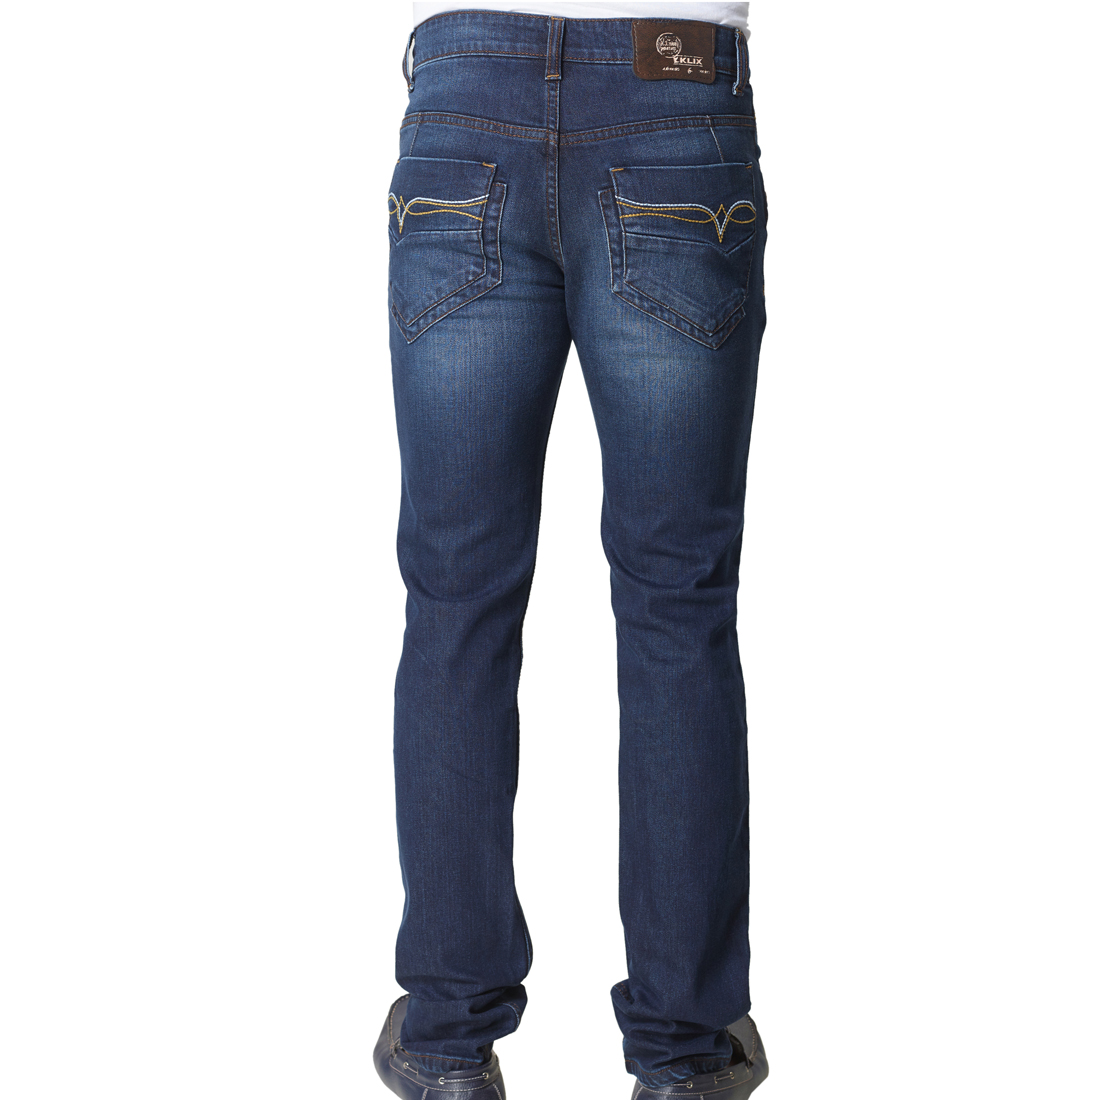 Buy Klix Marvelous Regular Blue Jeans Online @ ₹1499 from ShopClues